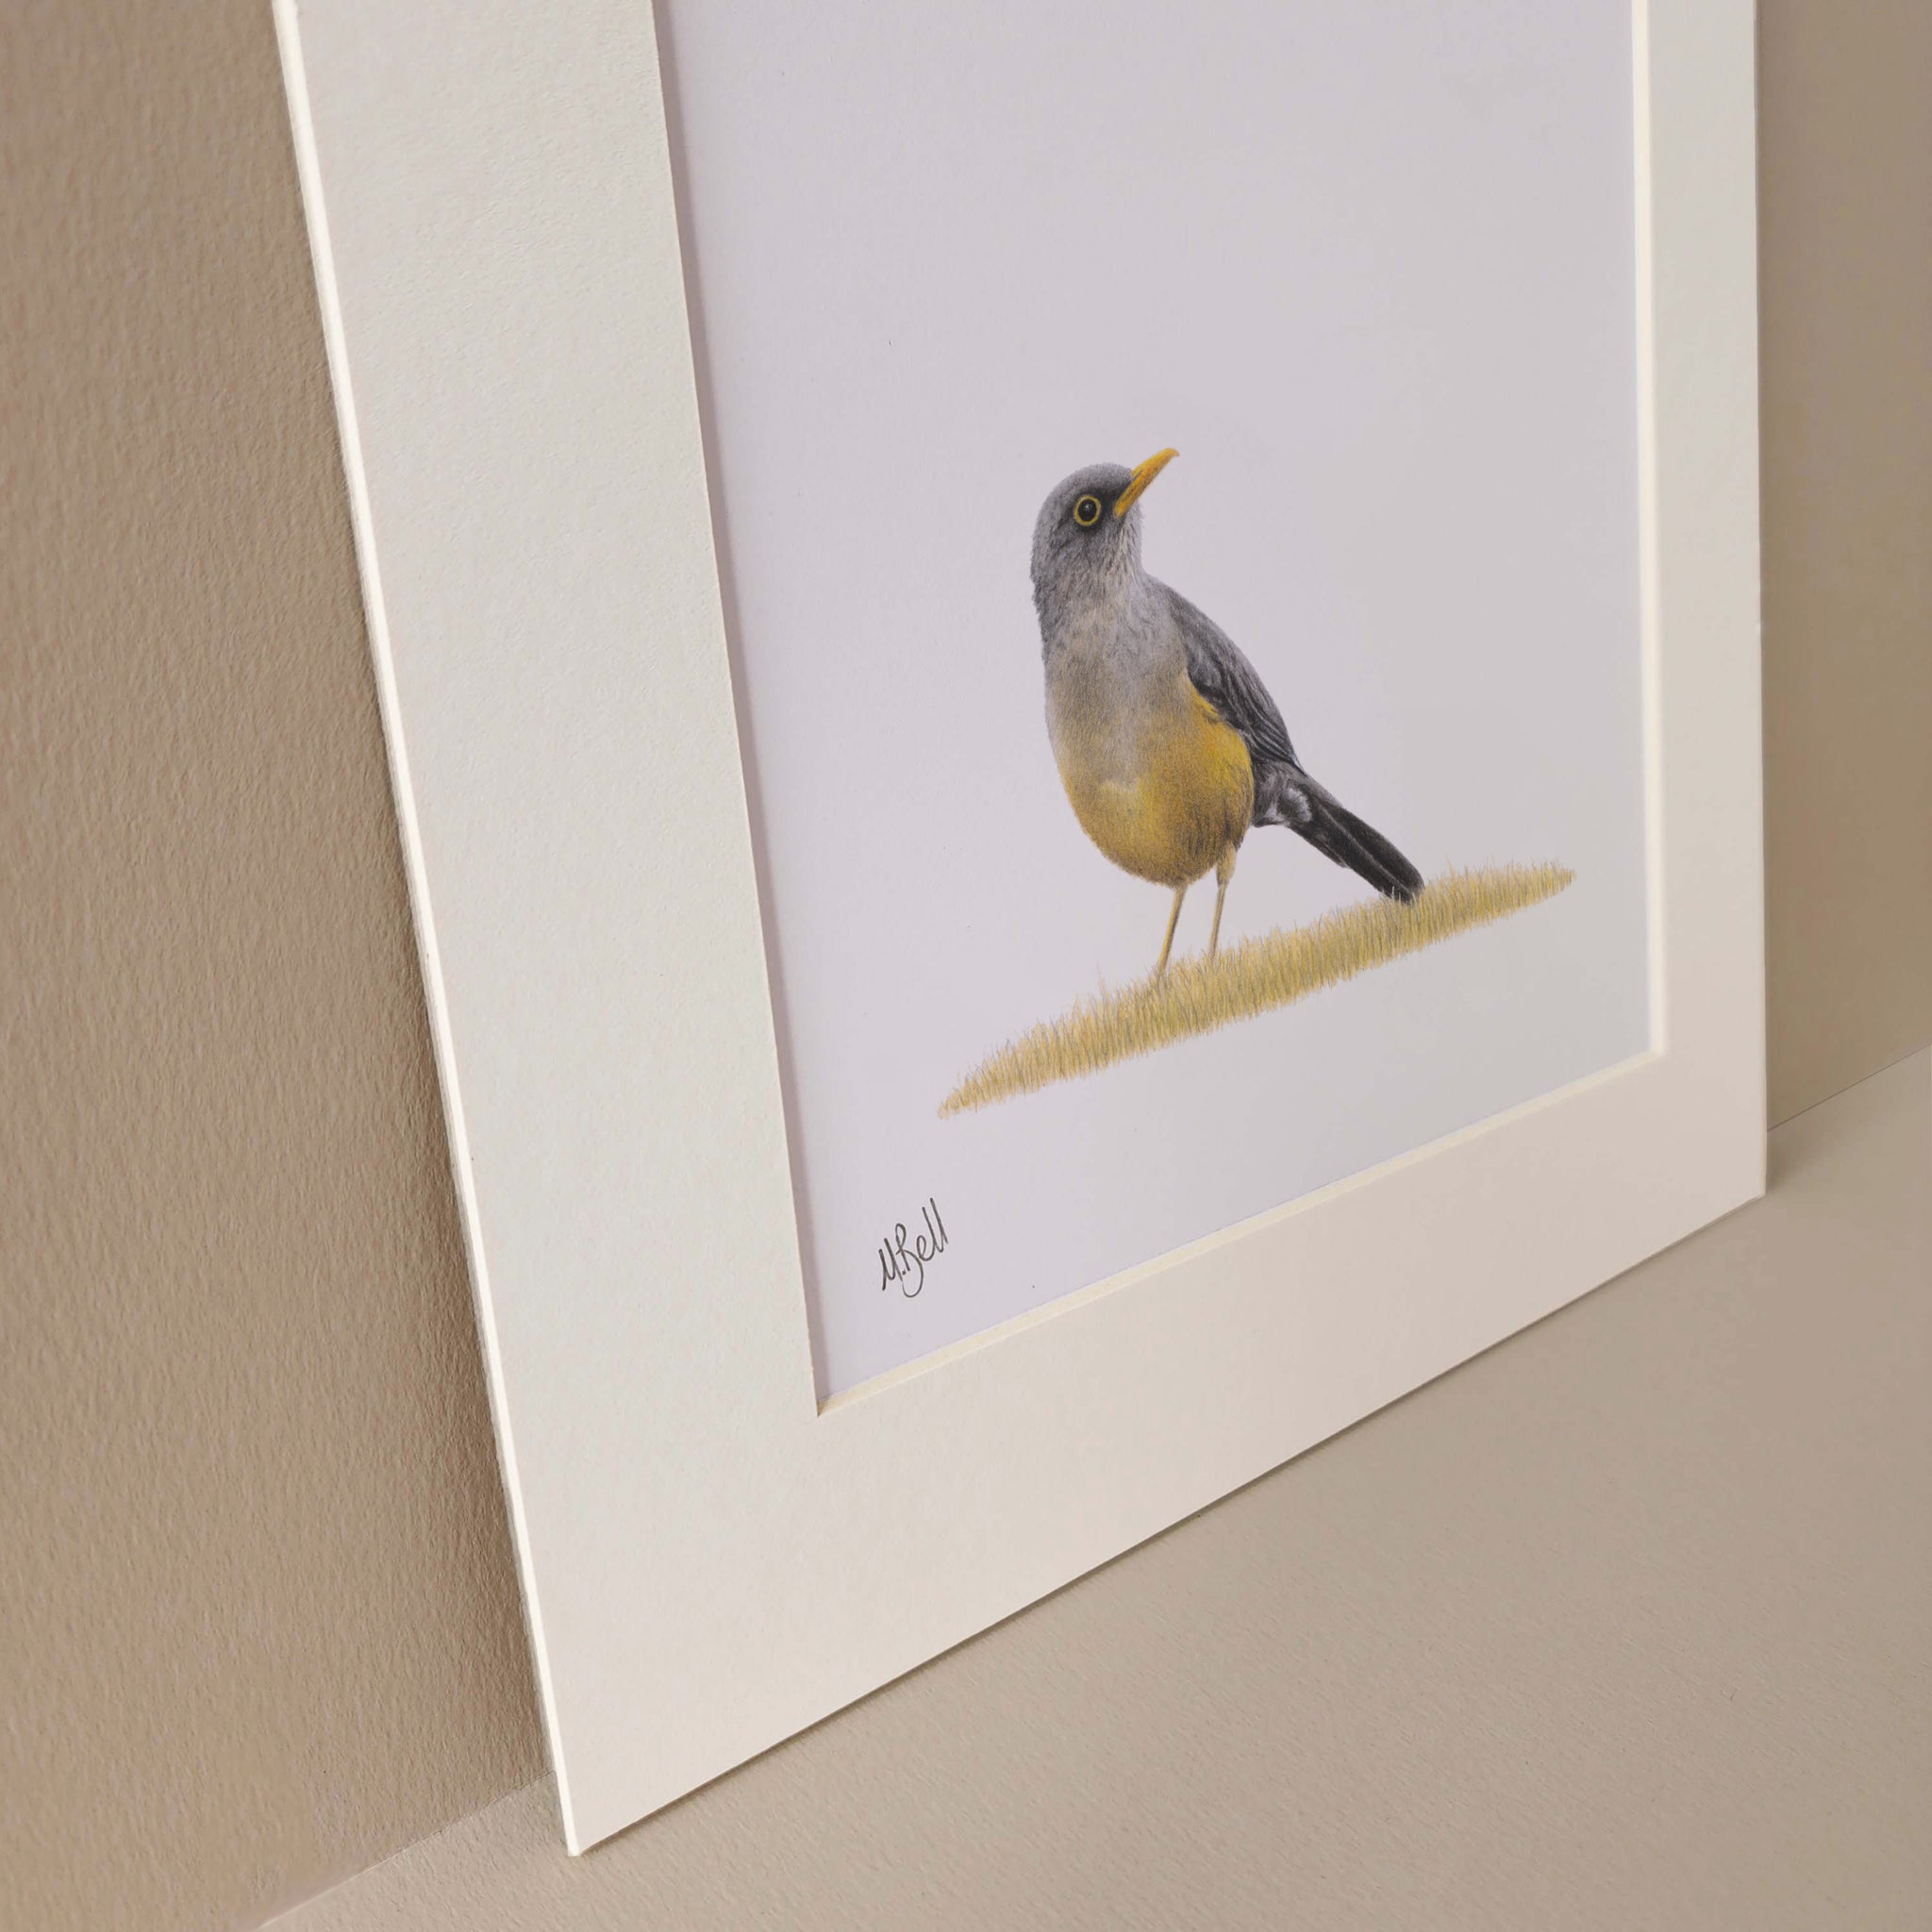 Olive Thrush bird artwork